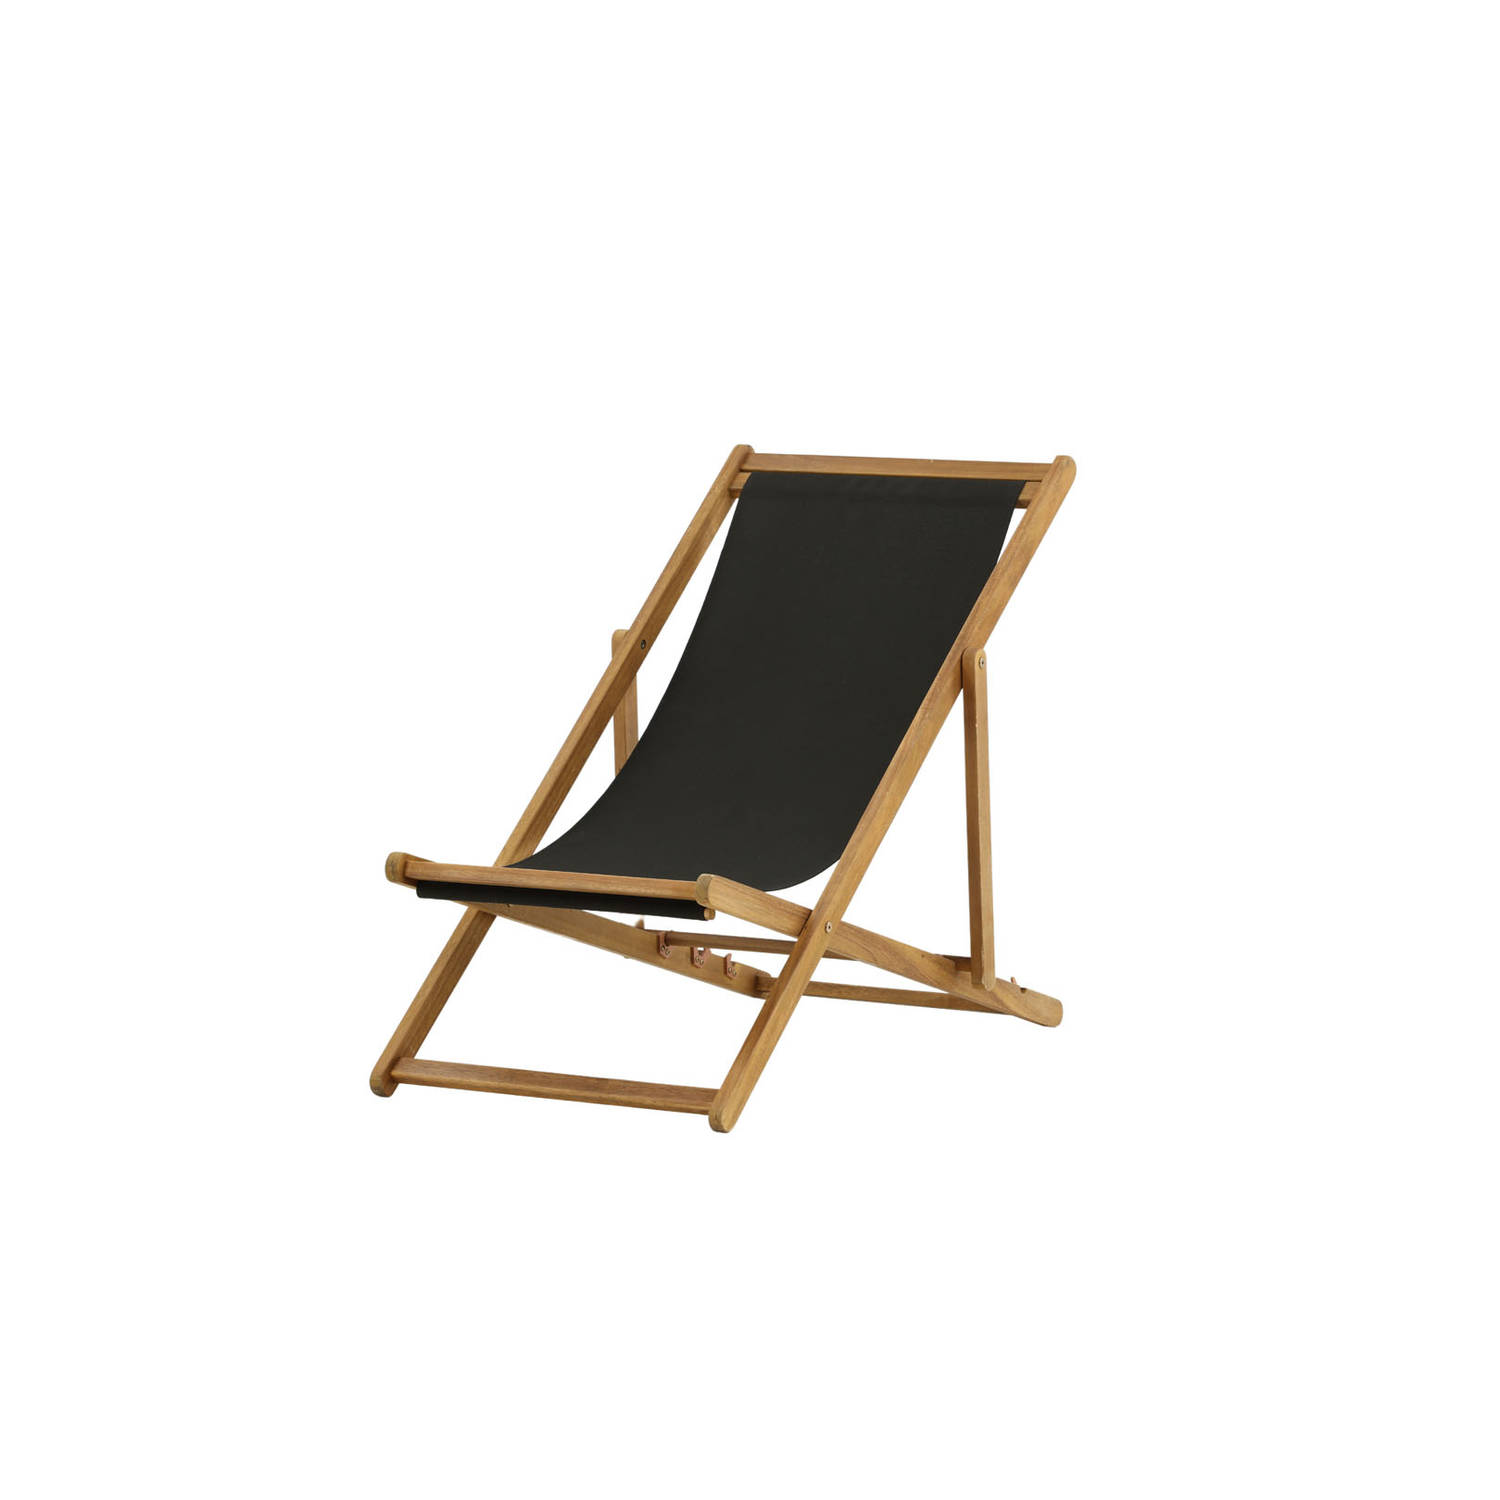 Hioshop Peachy tuinligstoel, opvouwbare strandstoel grijs.